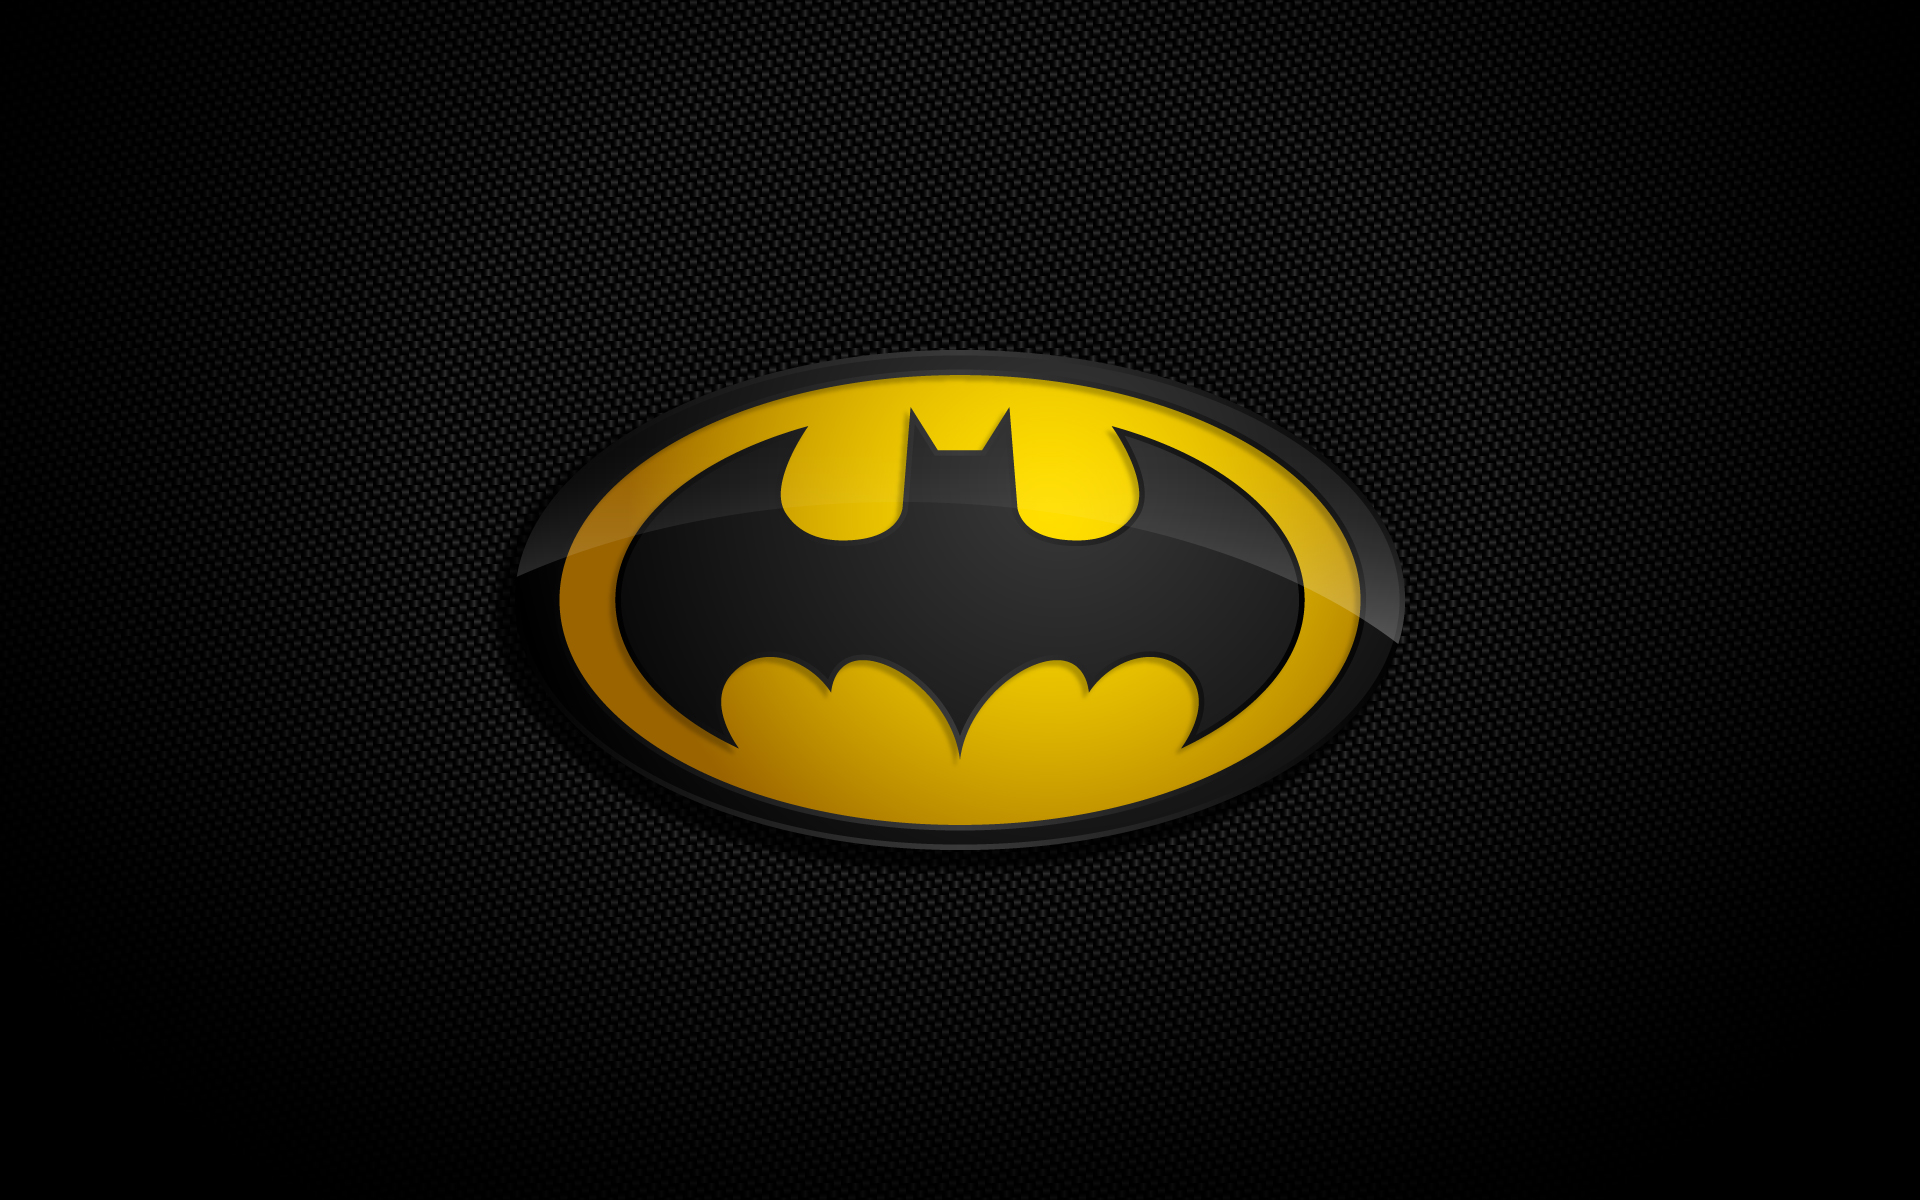 Gotham City's iconic Bat Signal symbol illuminates the night sky.